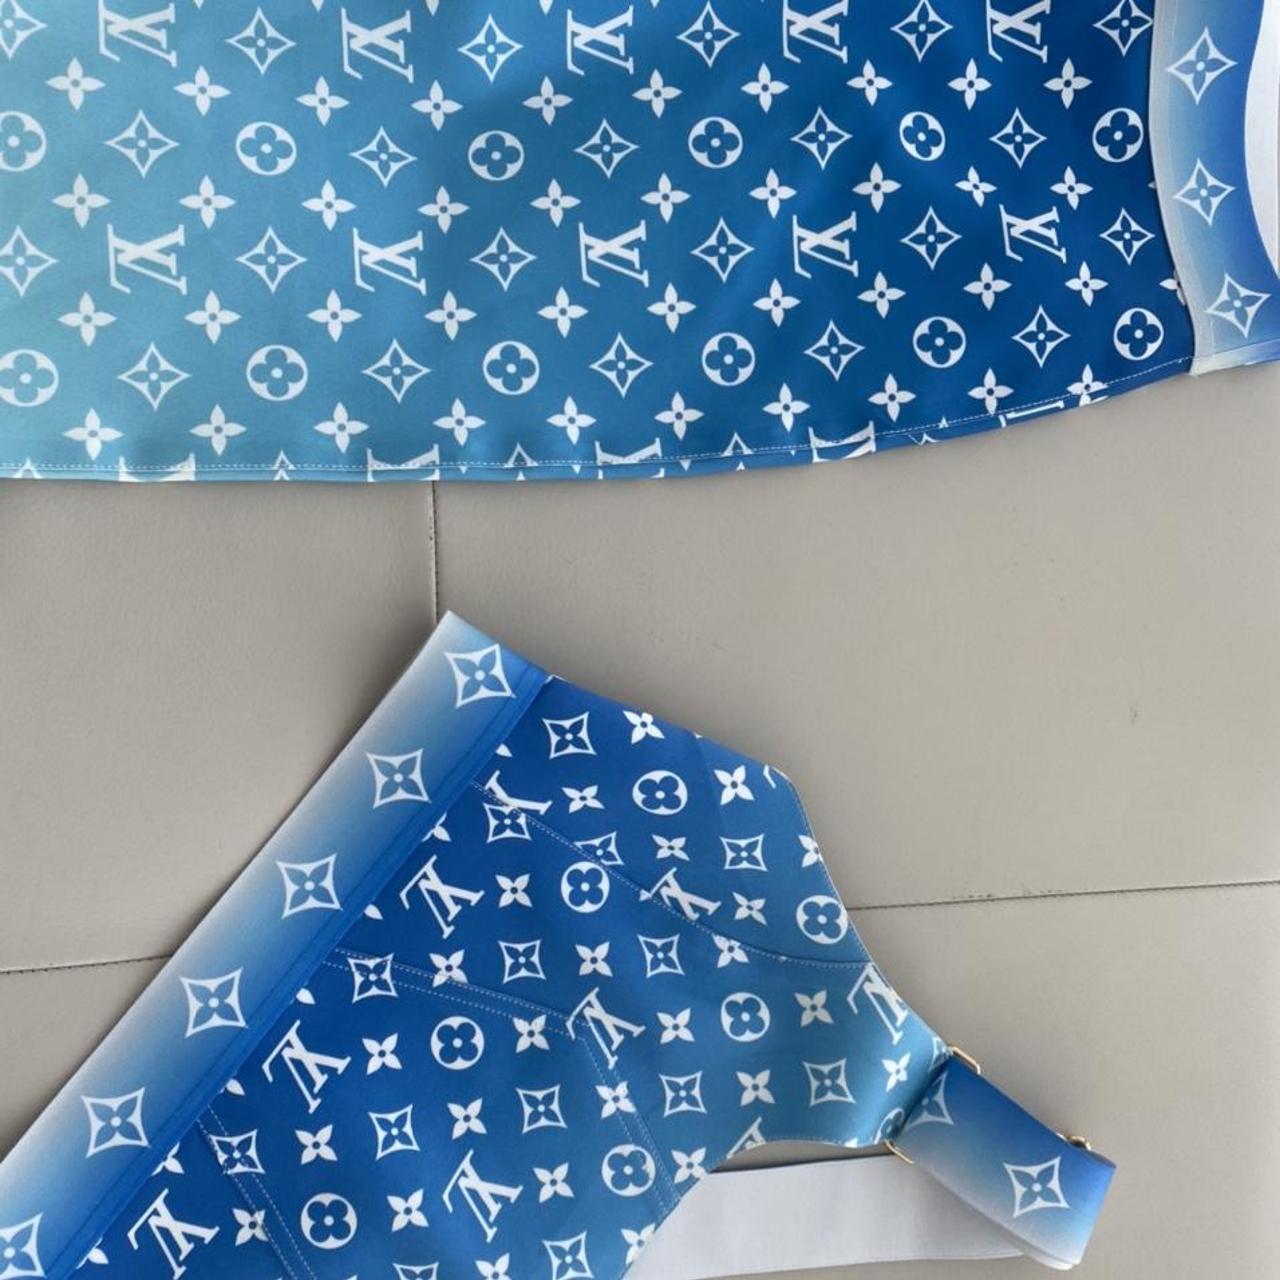 TRENDING] Louis Vuitton Blue 3D Hoodie Leggings Set LV Gift